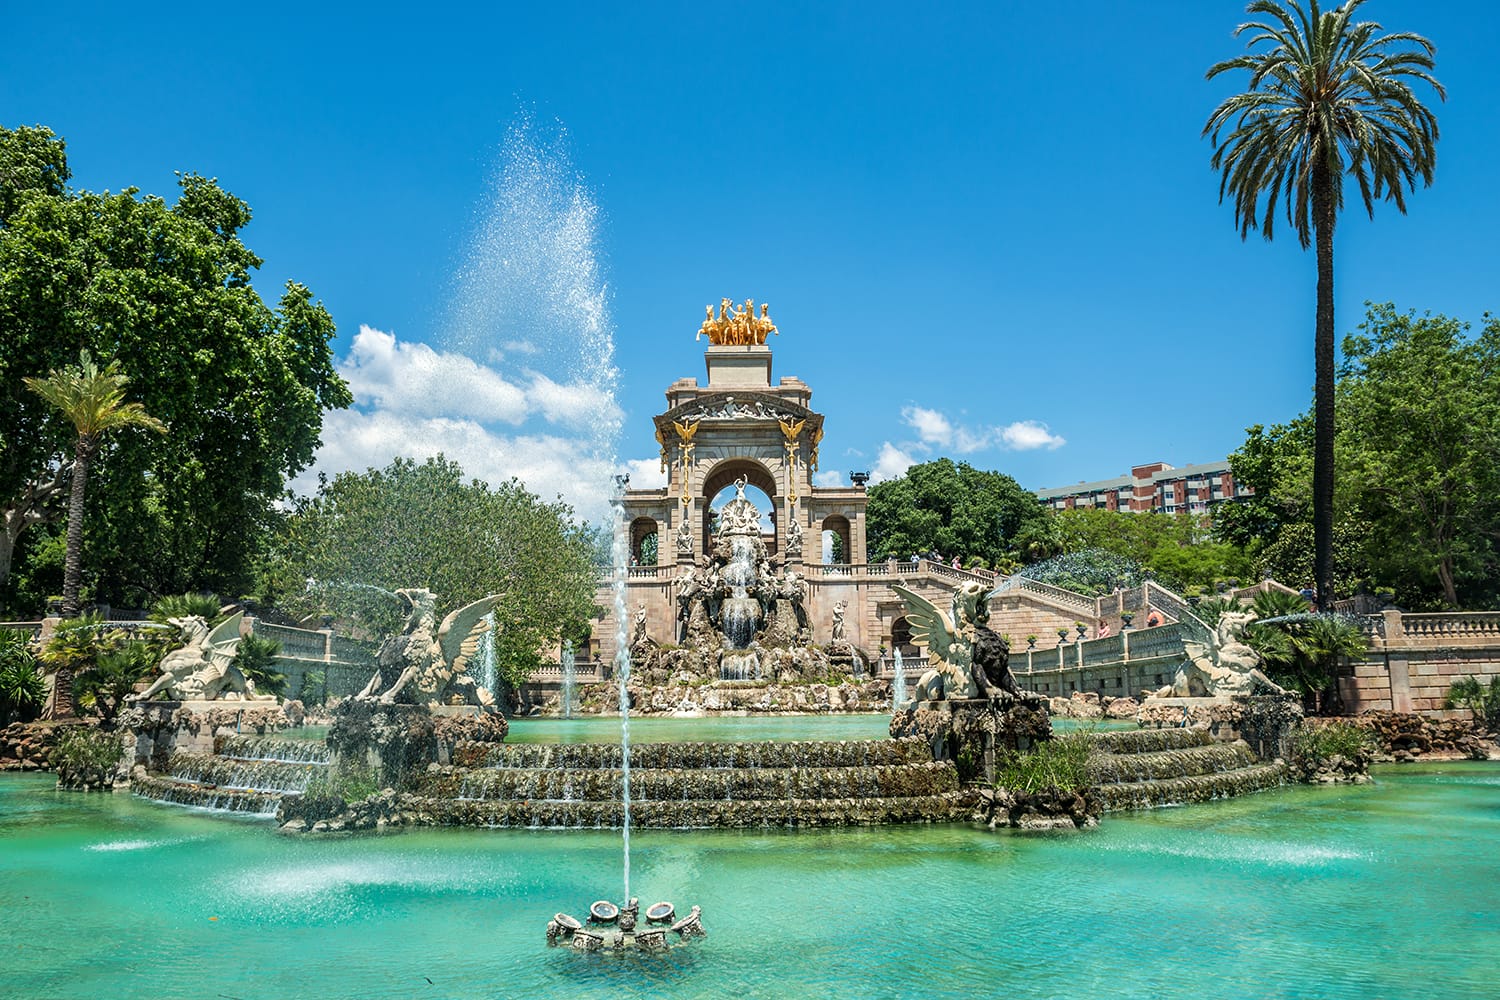 Fountain in Parc de la Ciutadella called Cascada in Barcelona, Spain